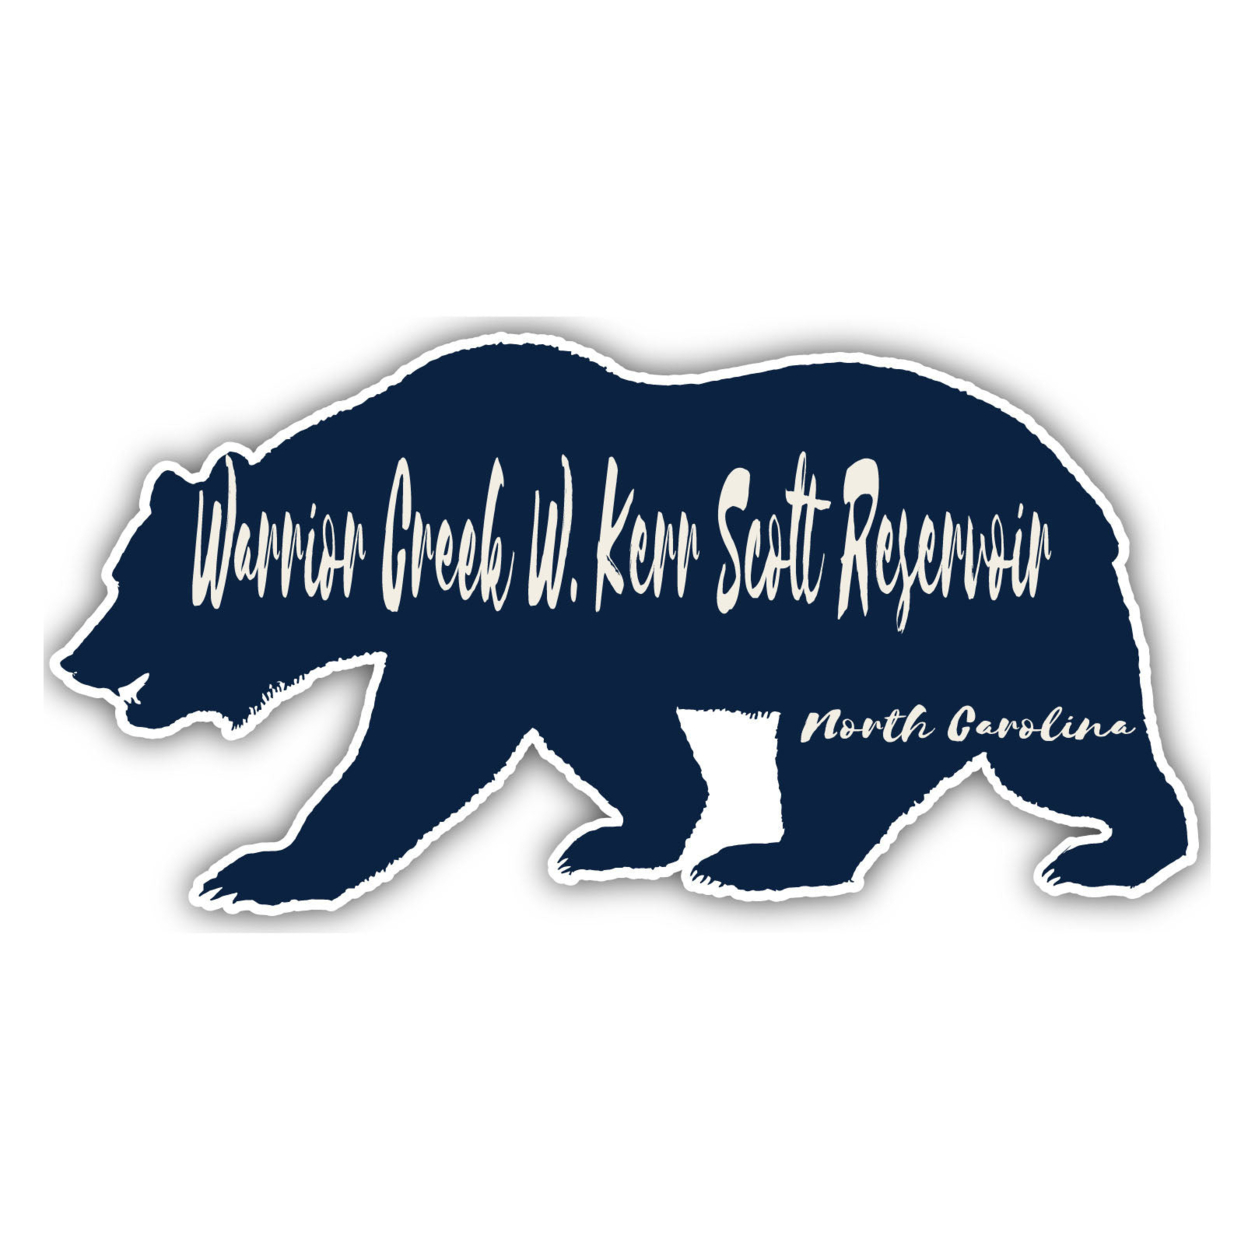 Warrior Creek W. Kerr Scott Reservoir North Carolina Souvenir Decorative Stickers (Choose Theme And Size) - Single Unit, 2-Inch, Bear